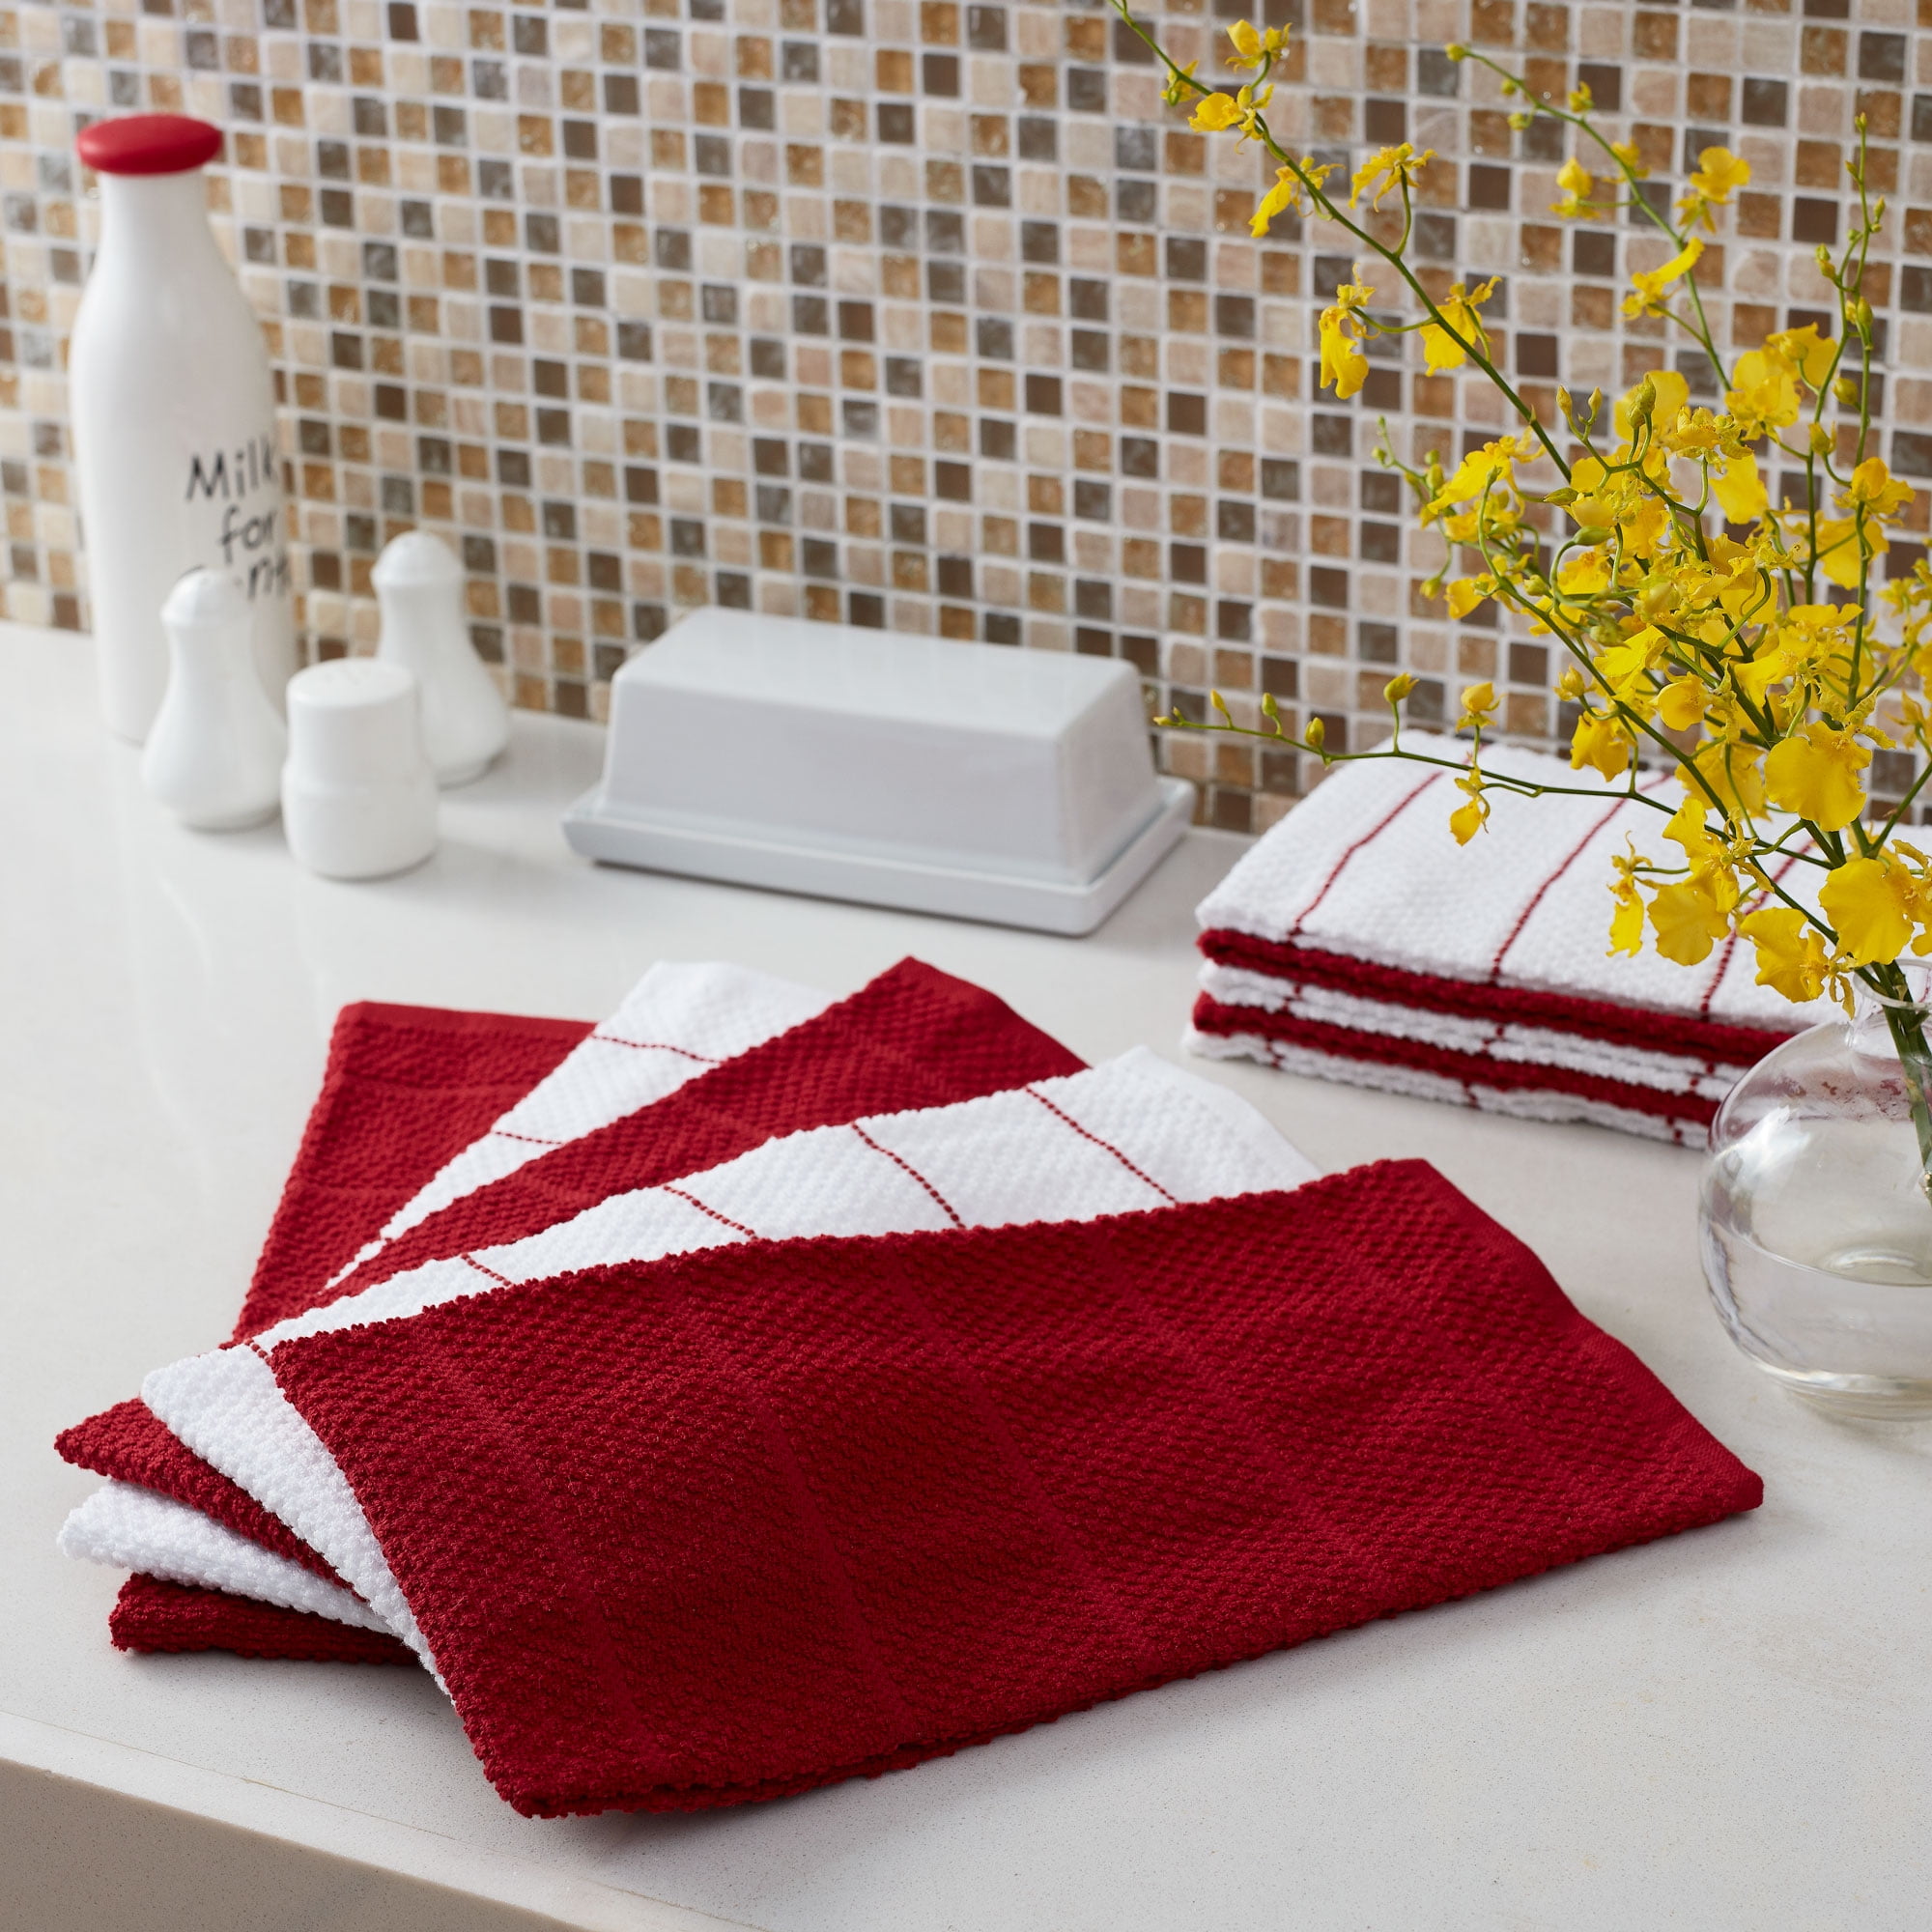  Marukio Ktchen Towels, Kitchen Dish Towels, 11 * 15.76